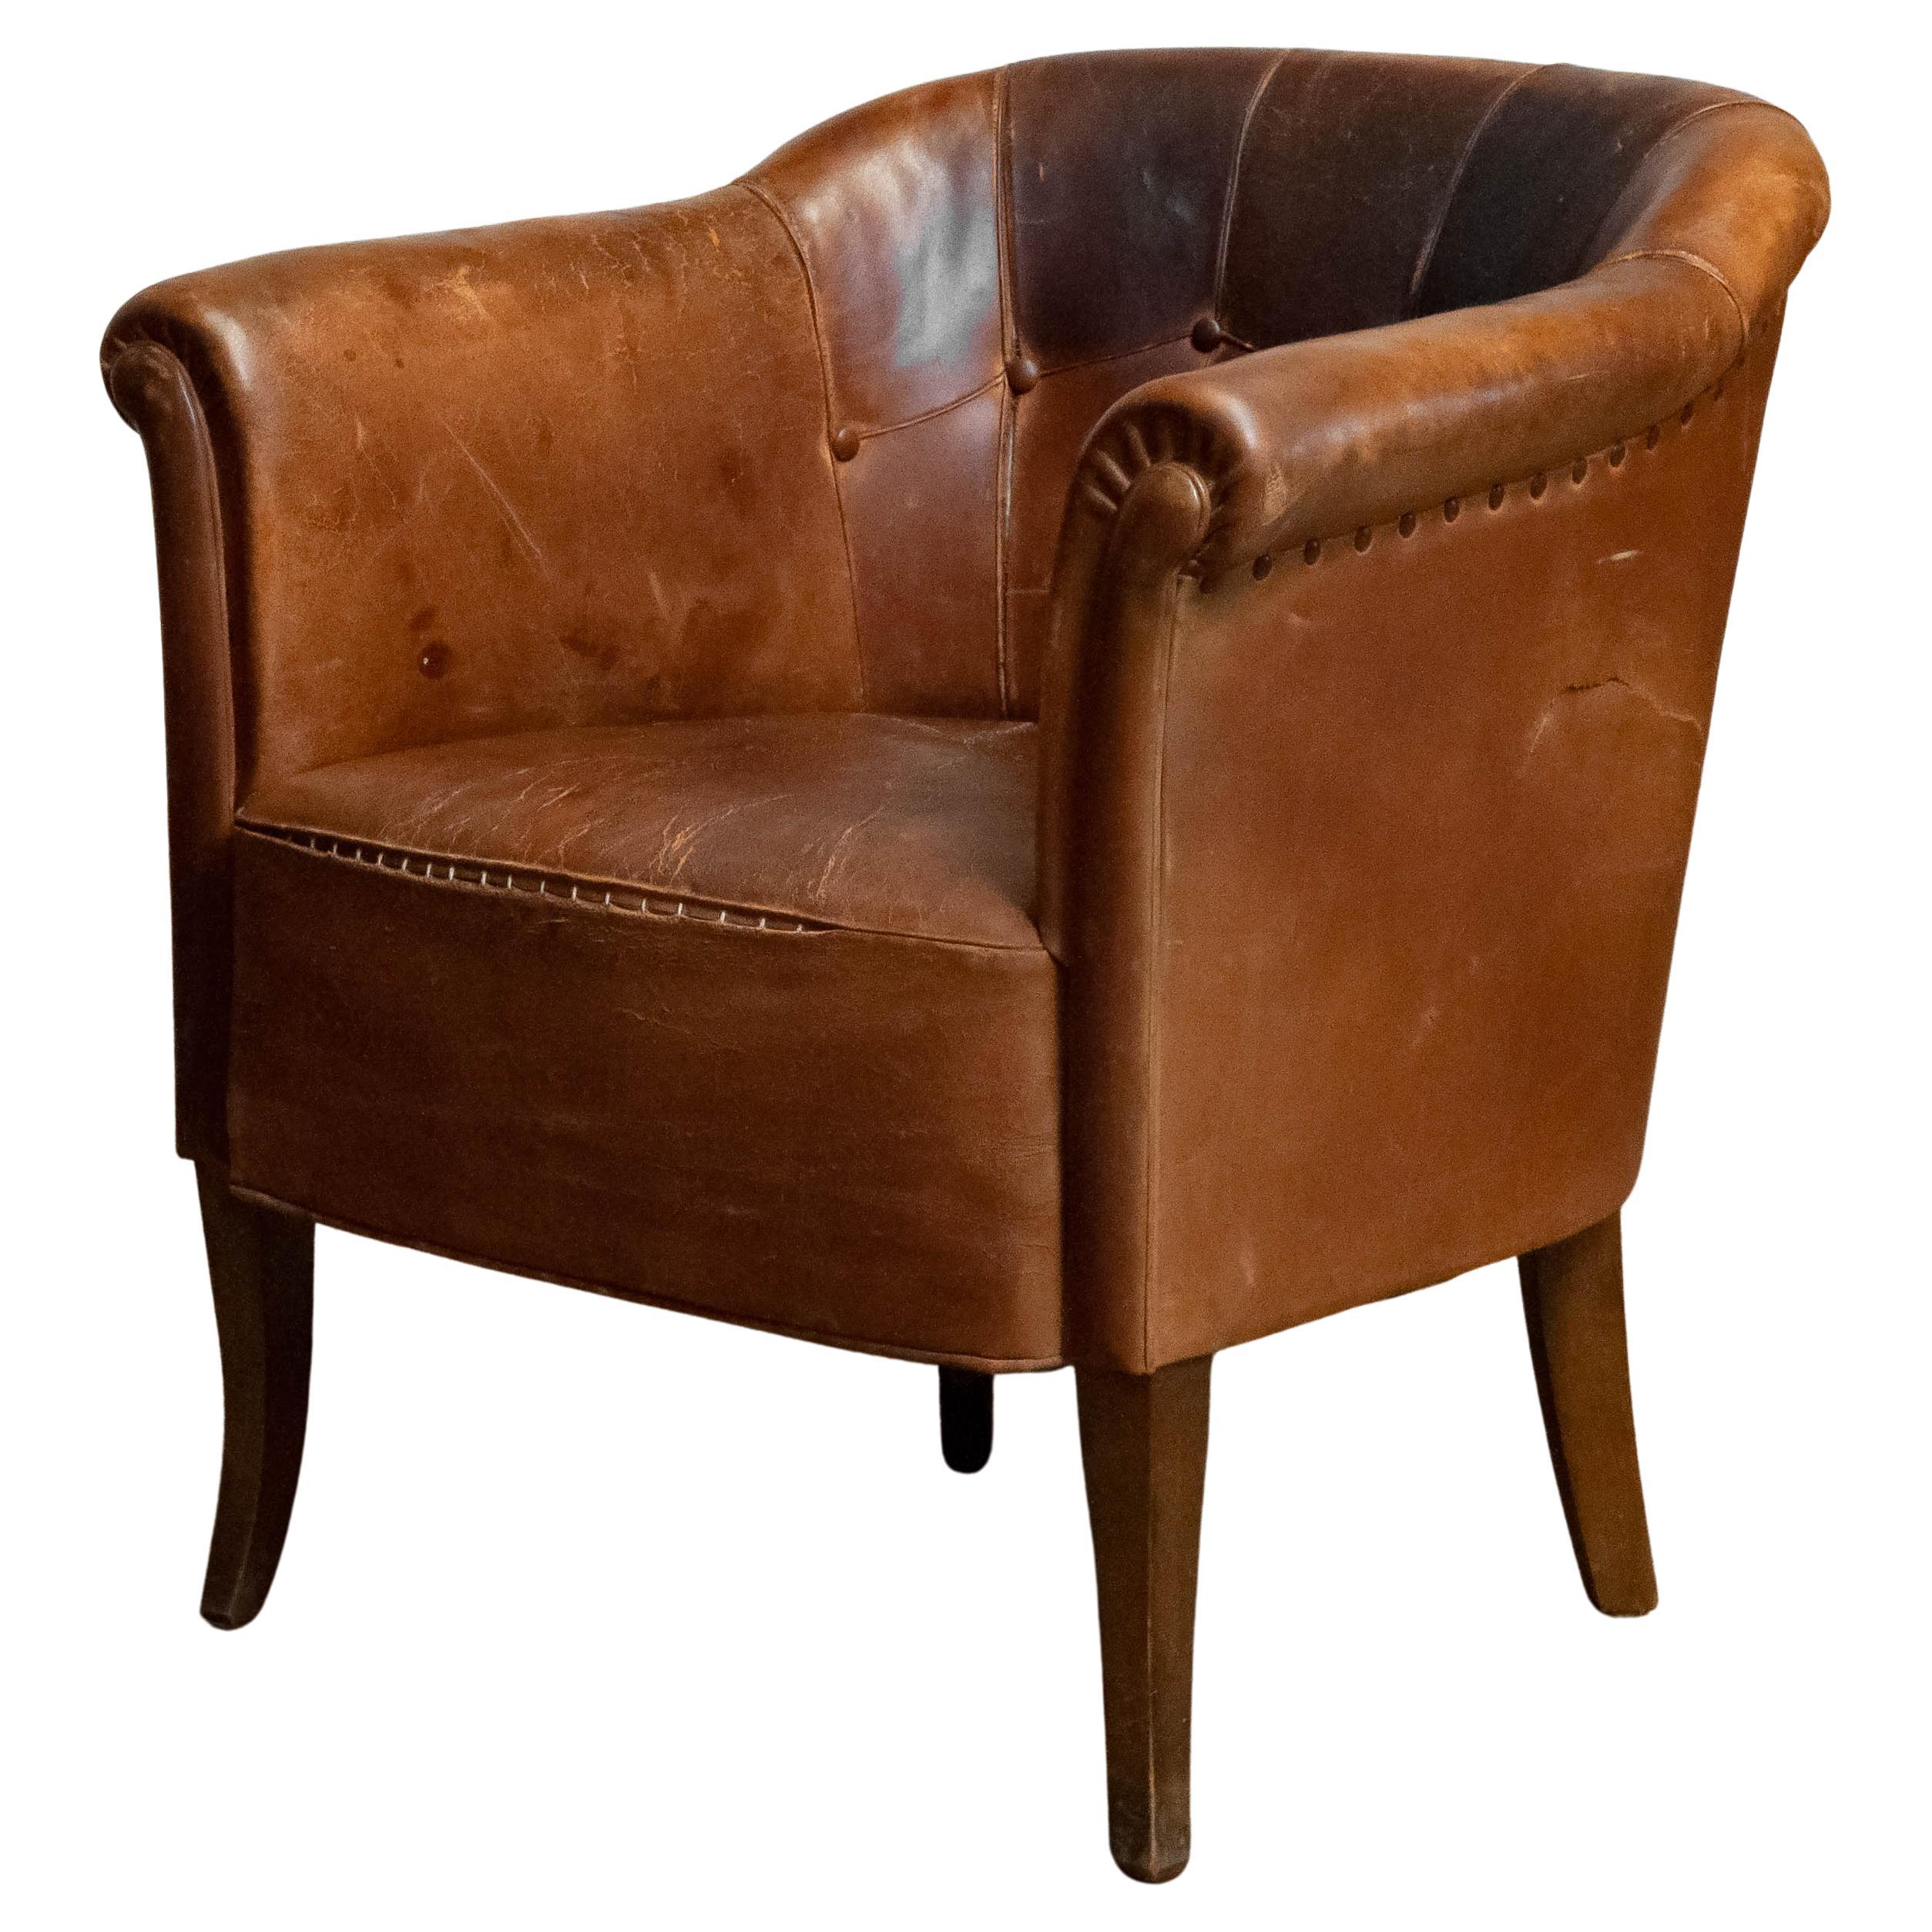 Late 19th Century Swedish Tan / Brown Nailed Leather Lounge / Club / Cigar Chair